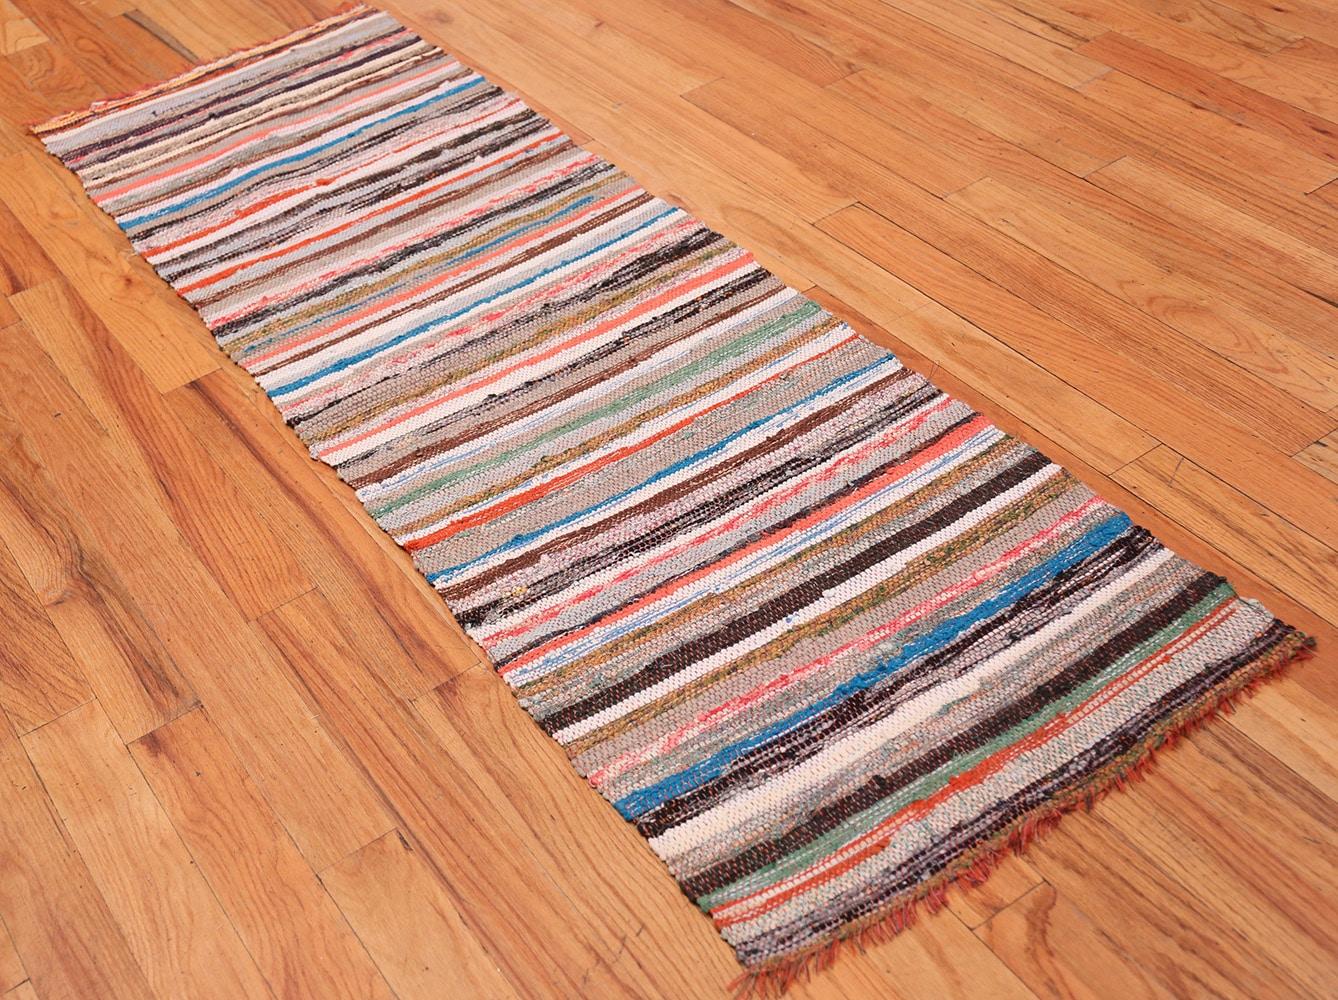 runner rug measurements